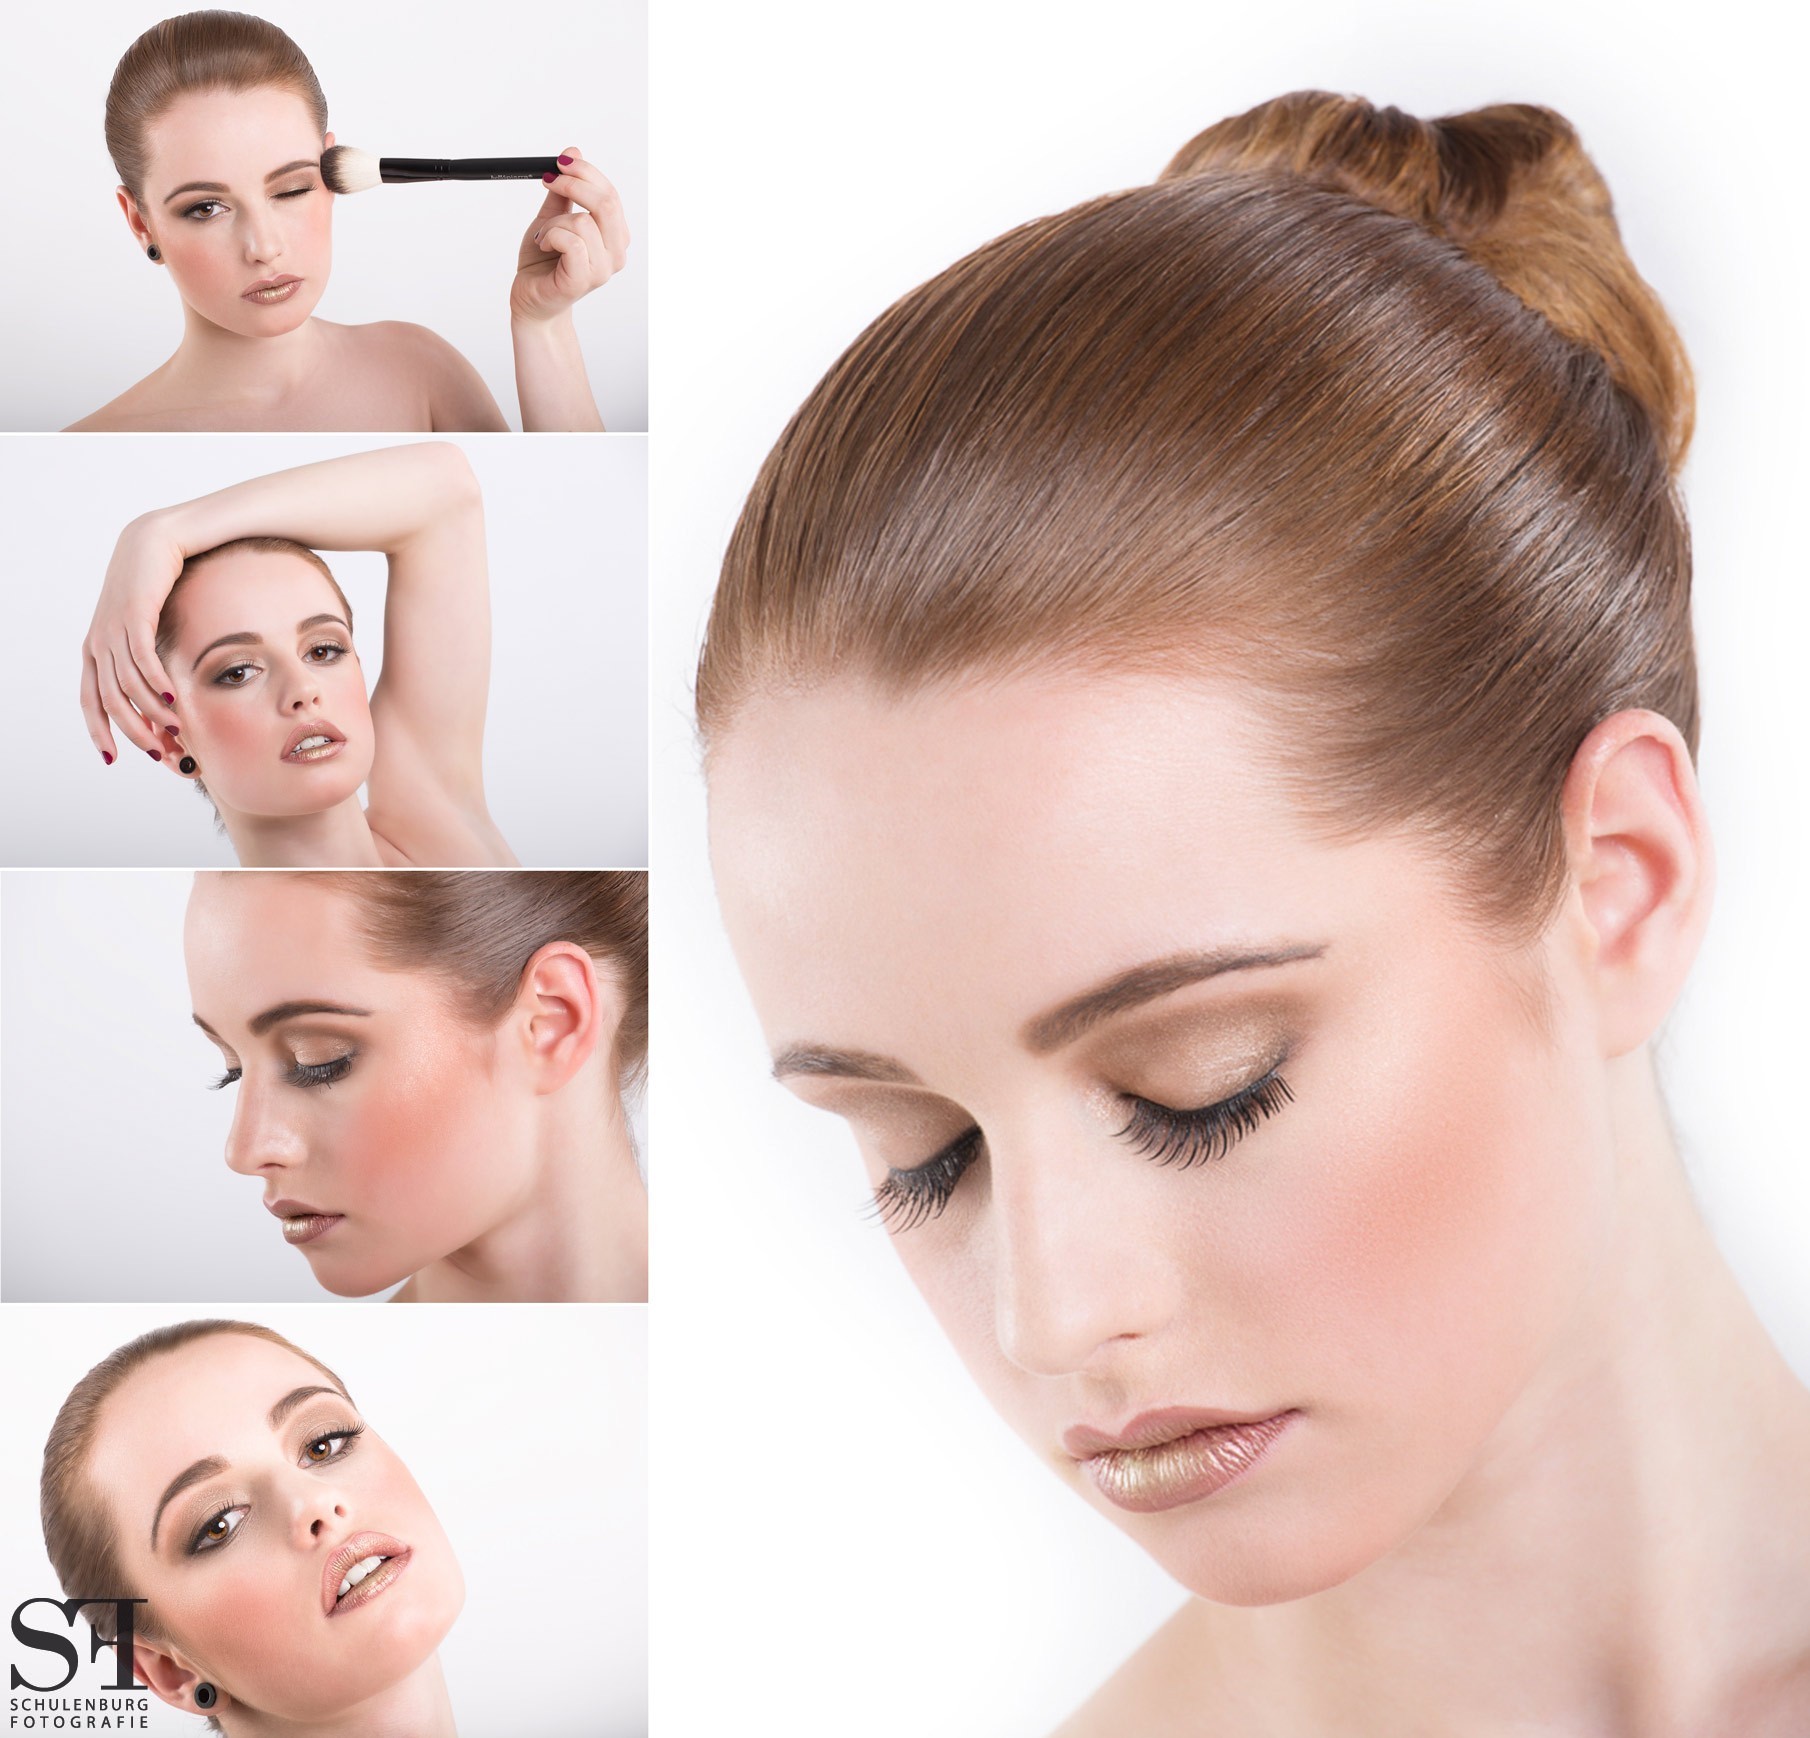 Fotograf: Henry Schulenburg, Hair & Make-up: Anja Rühl, Model: Elisa M. ...